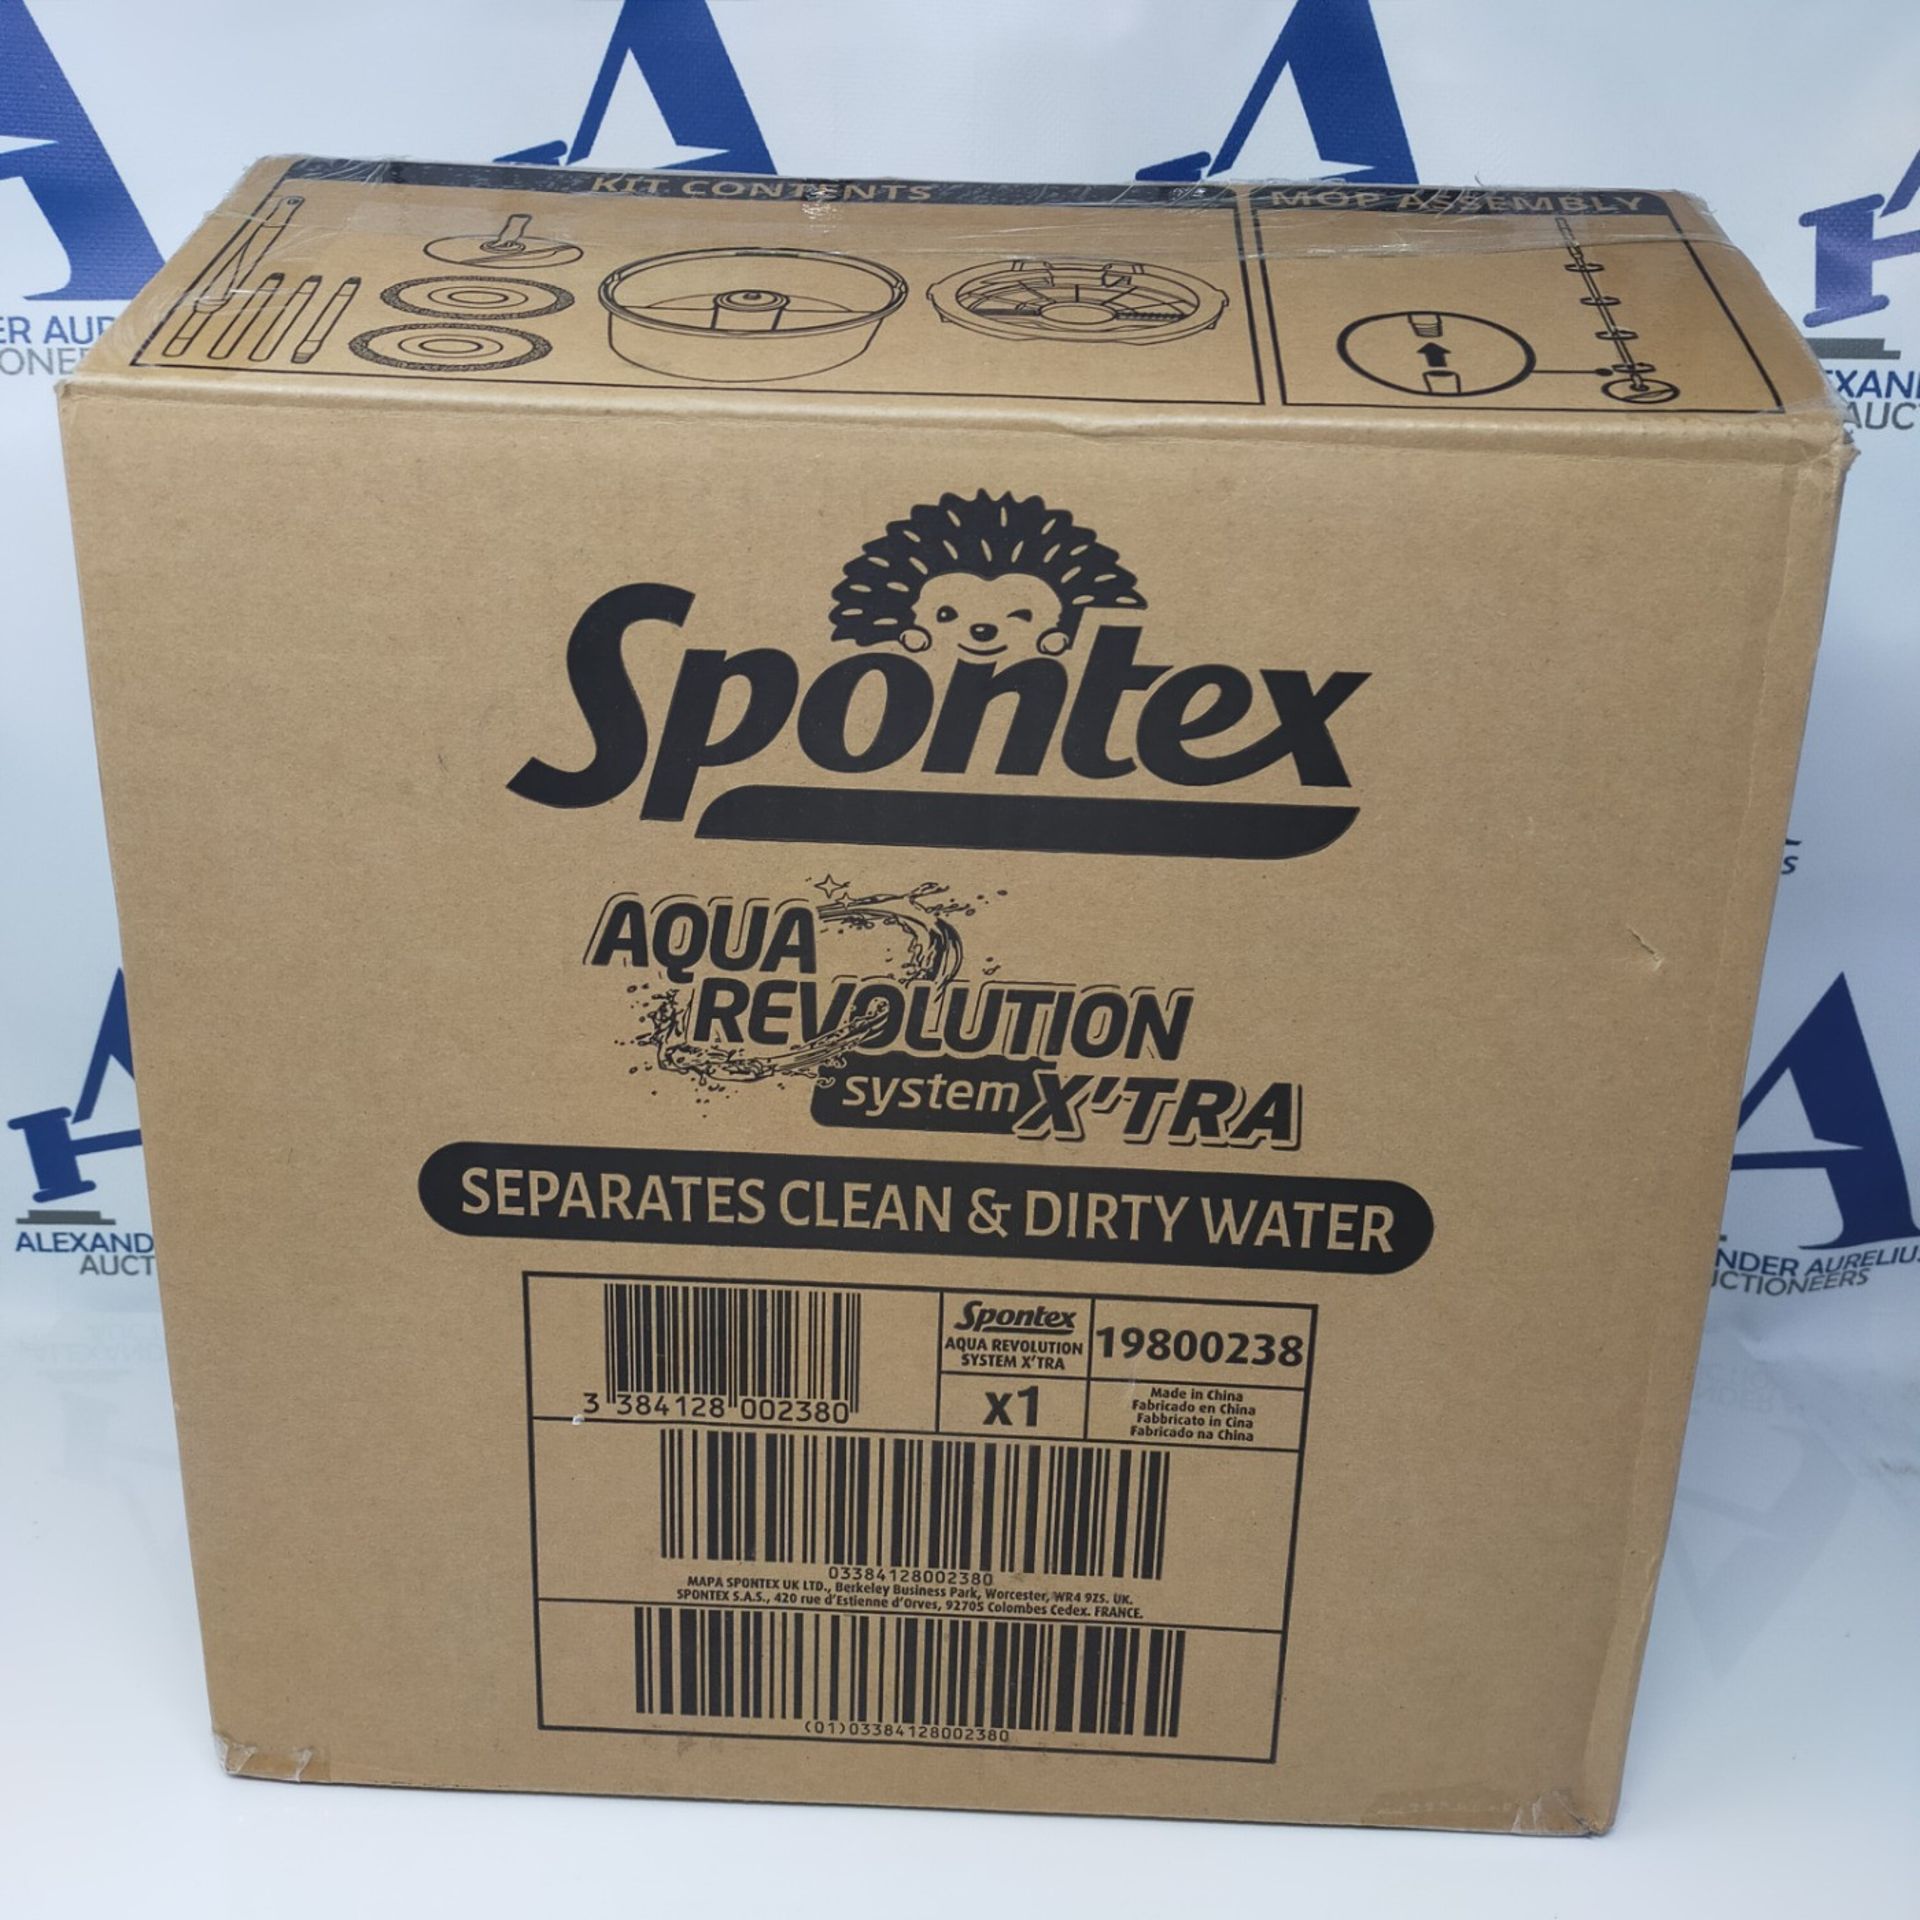 Spontex Aqua Revolution System X'tra Floor Mop and Bucket Set  Separates Clean & Di - Image 2 of 3